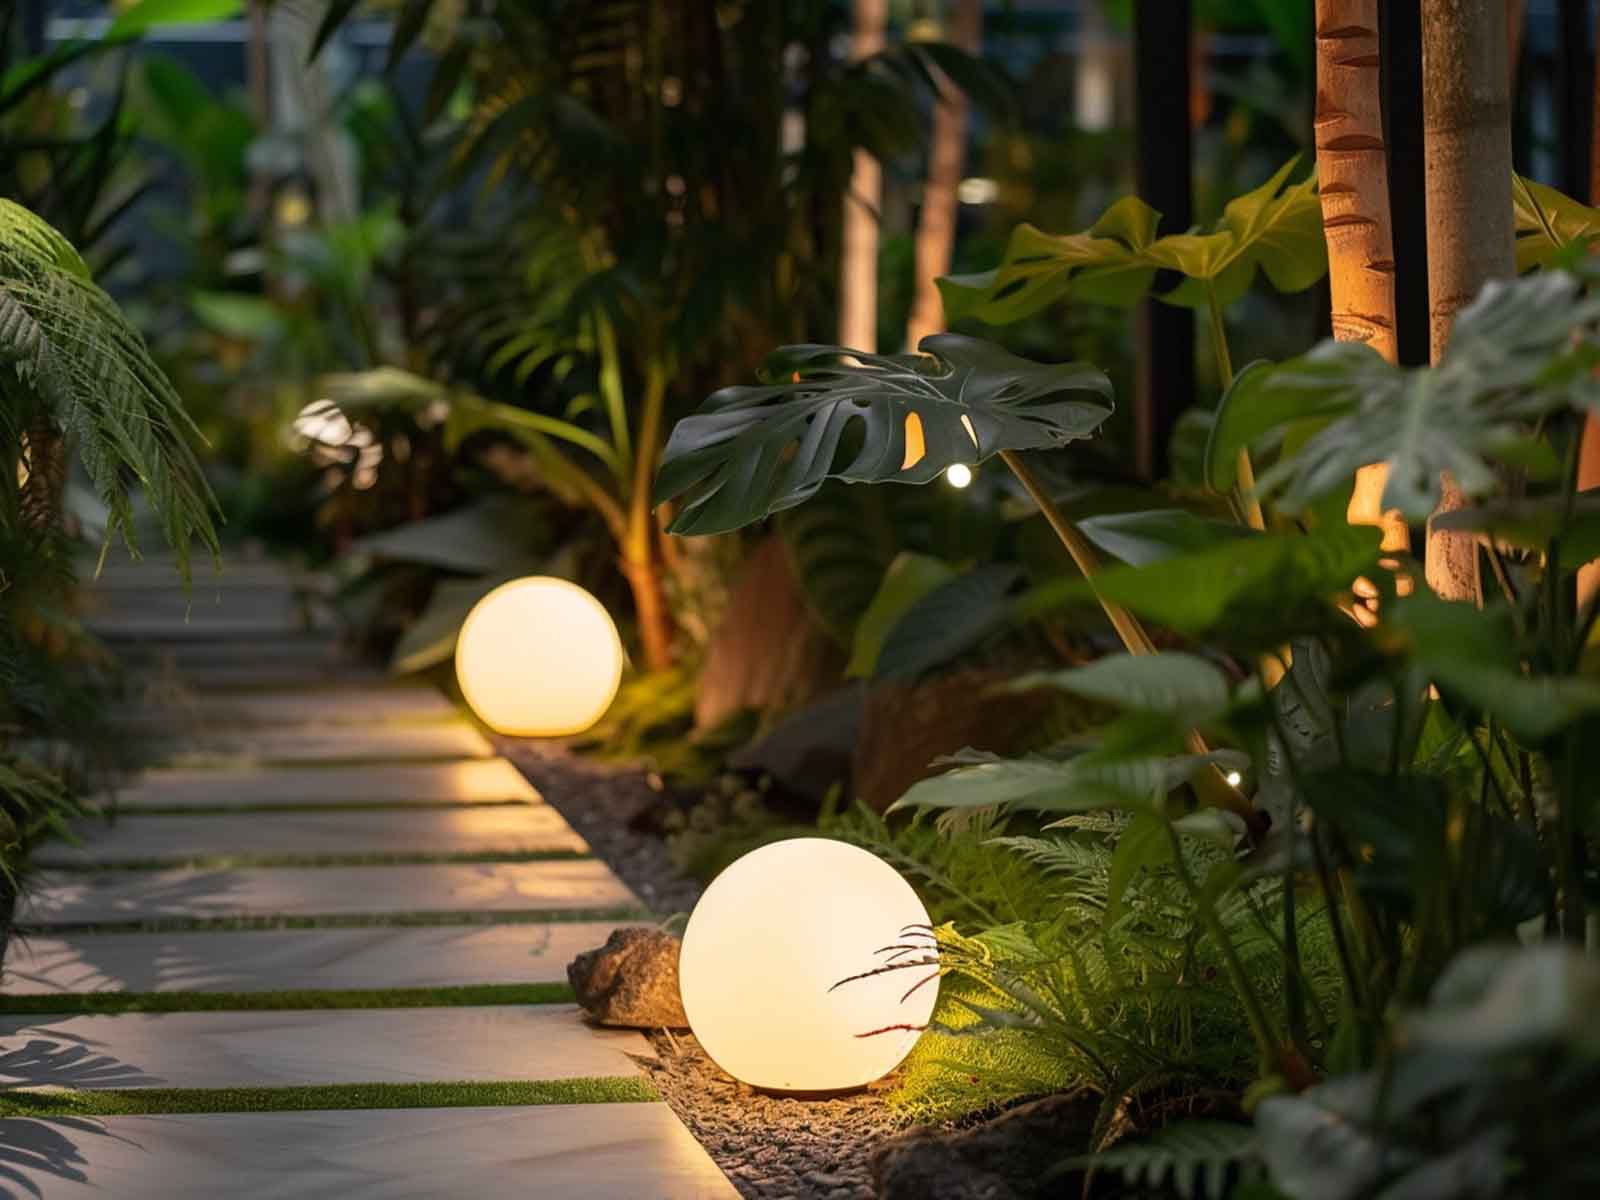 Solar-powered garden globes illuminating a garden's pathway